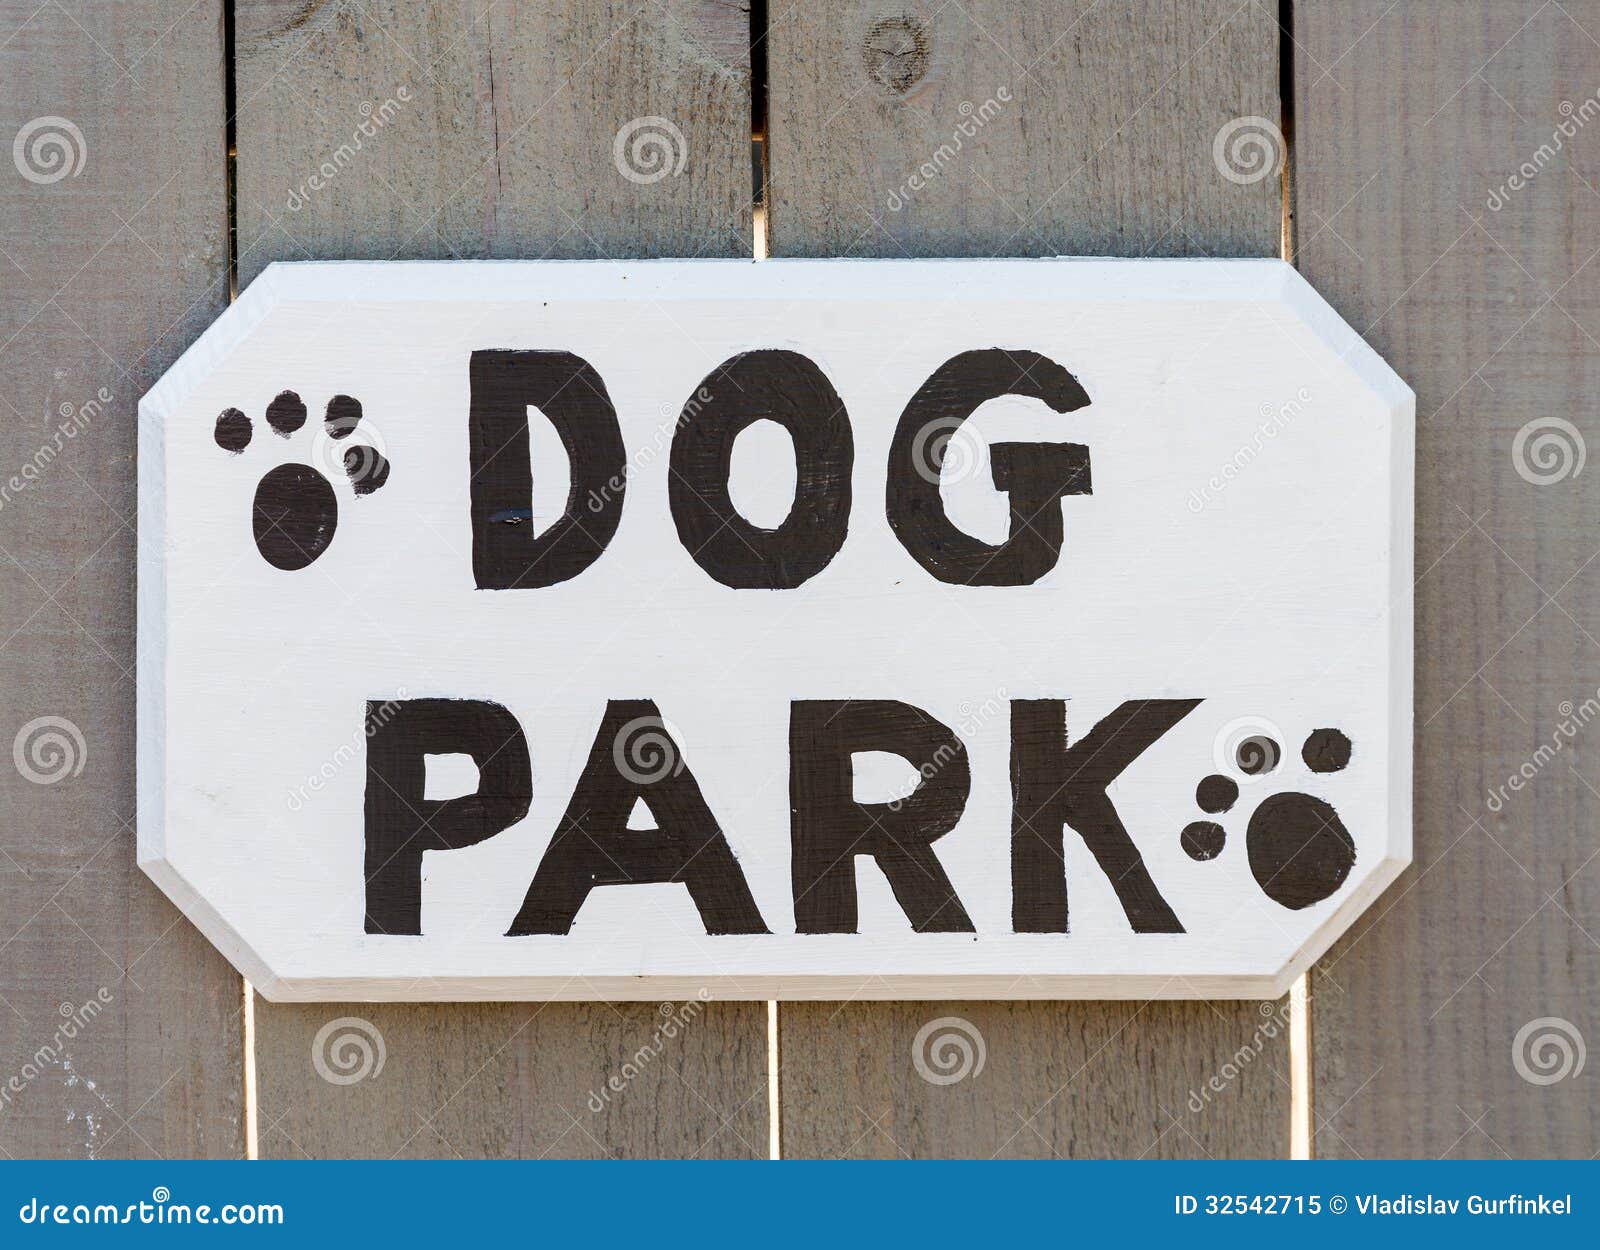 free clipart dog park - photo #31